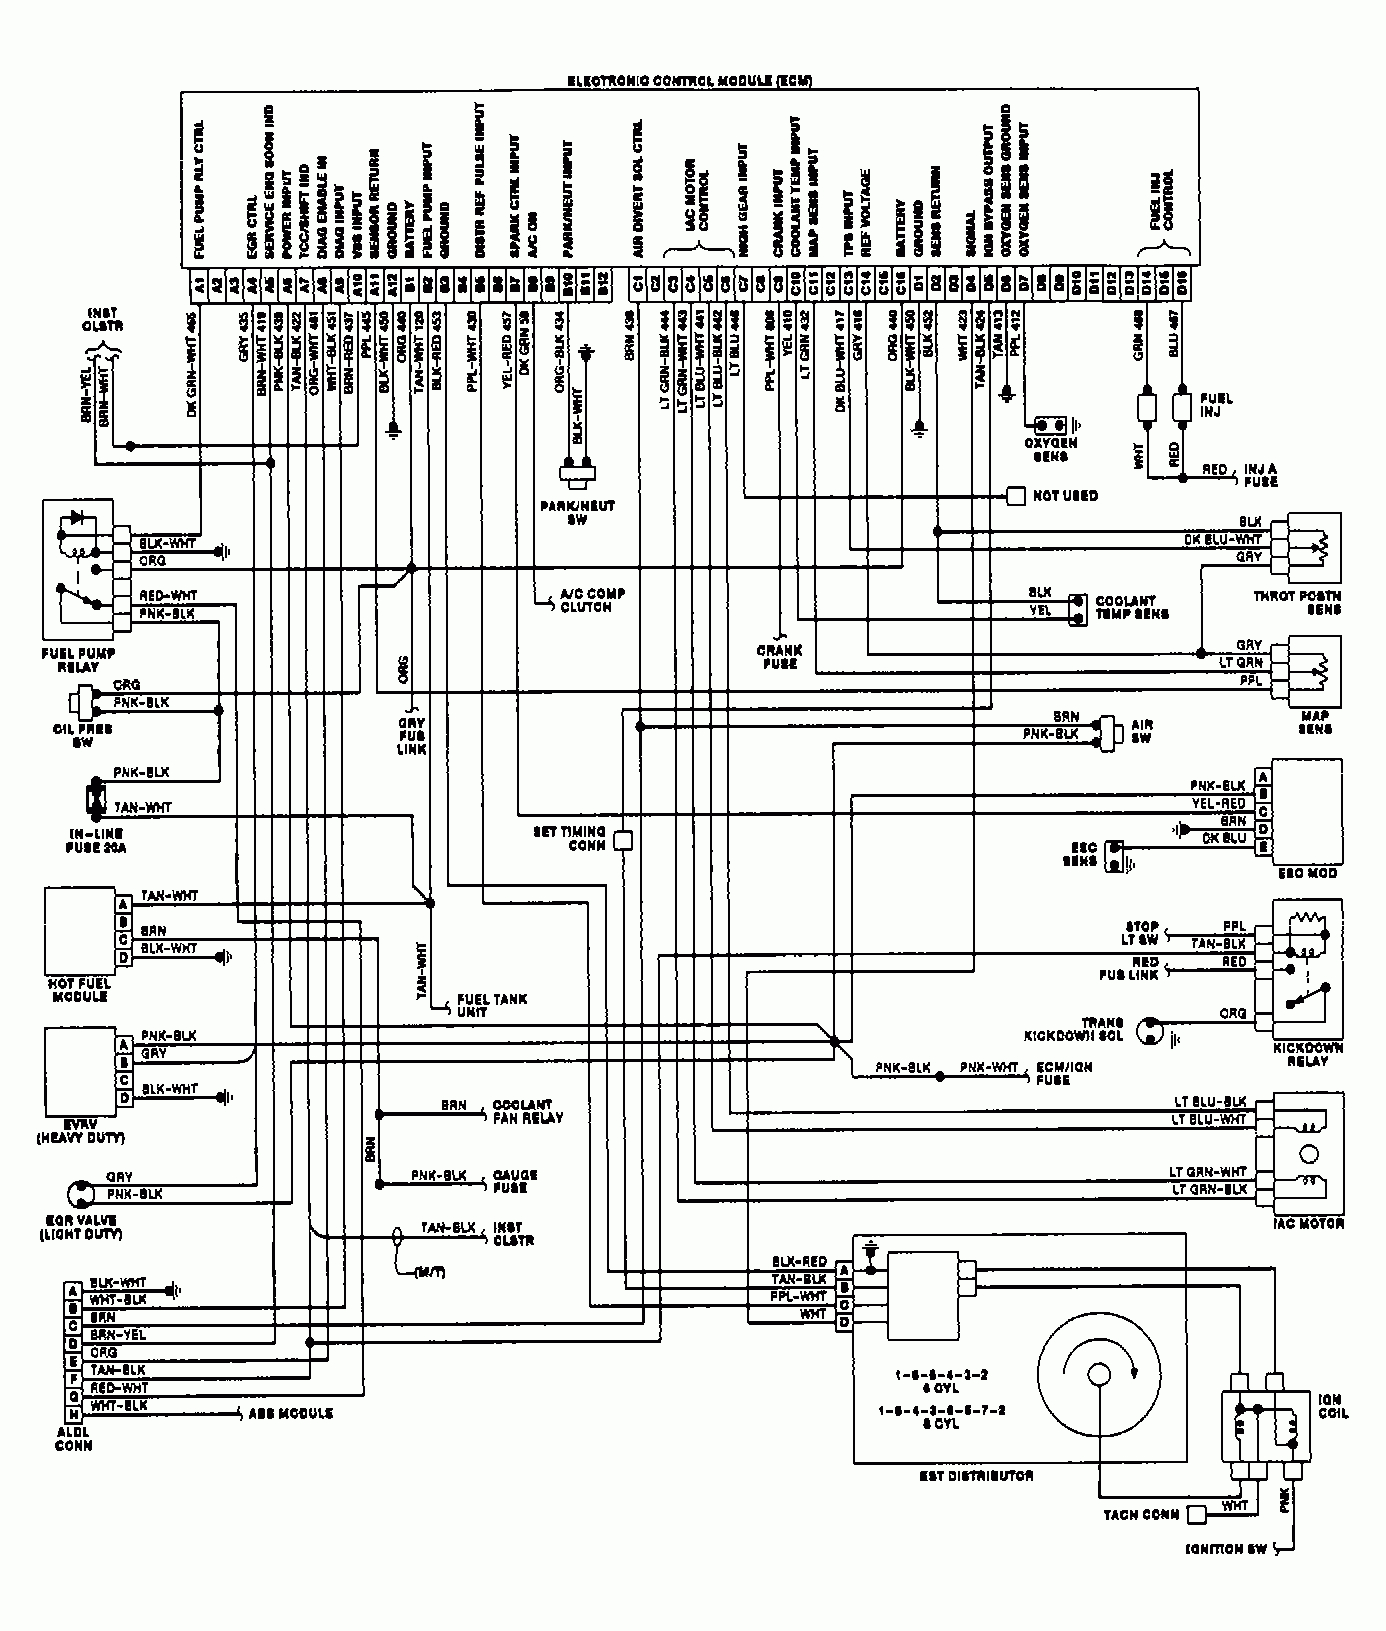 1988 Chevy Truck Wiring Diagram - Wiring Diagram